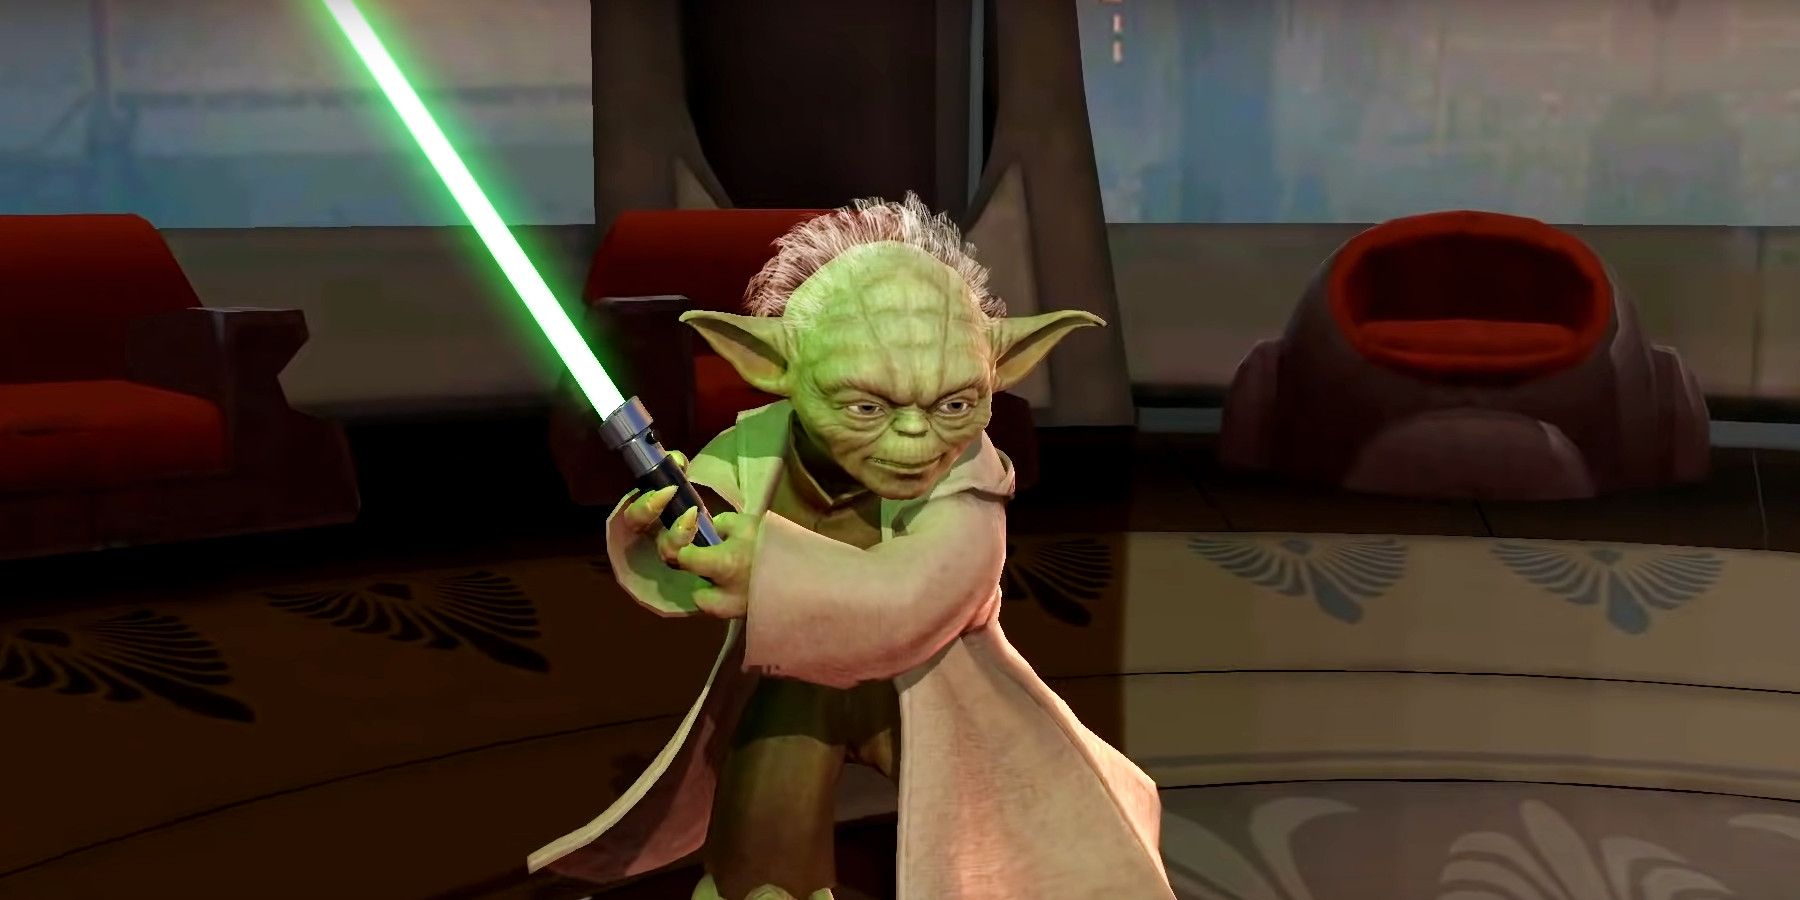 Cómo obtener al cíclope "Master Yoda" en Mobile Legends: Bang Bang